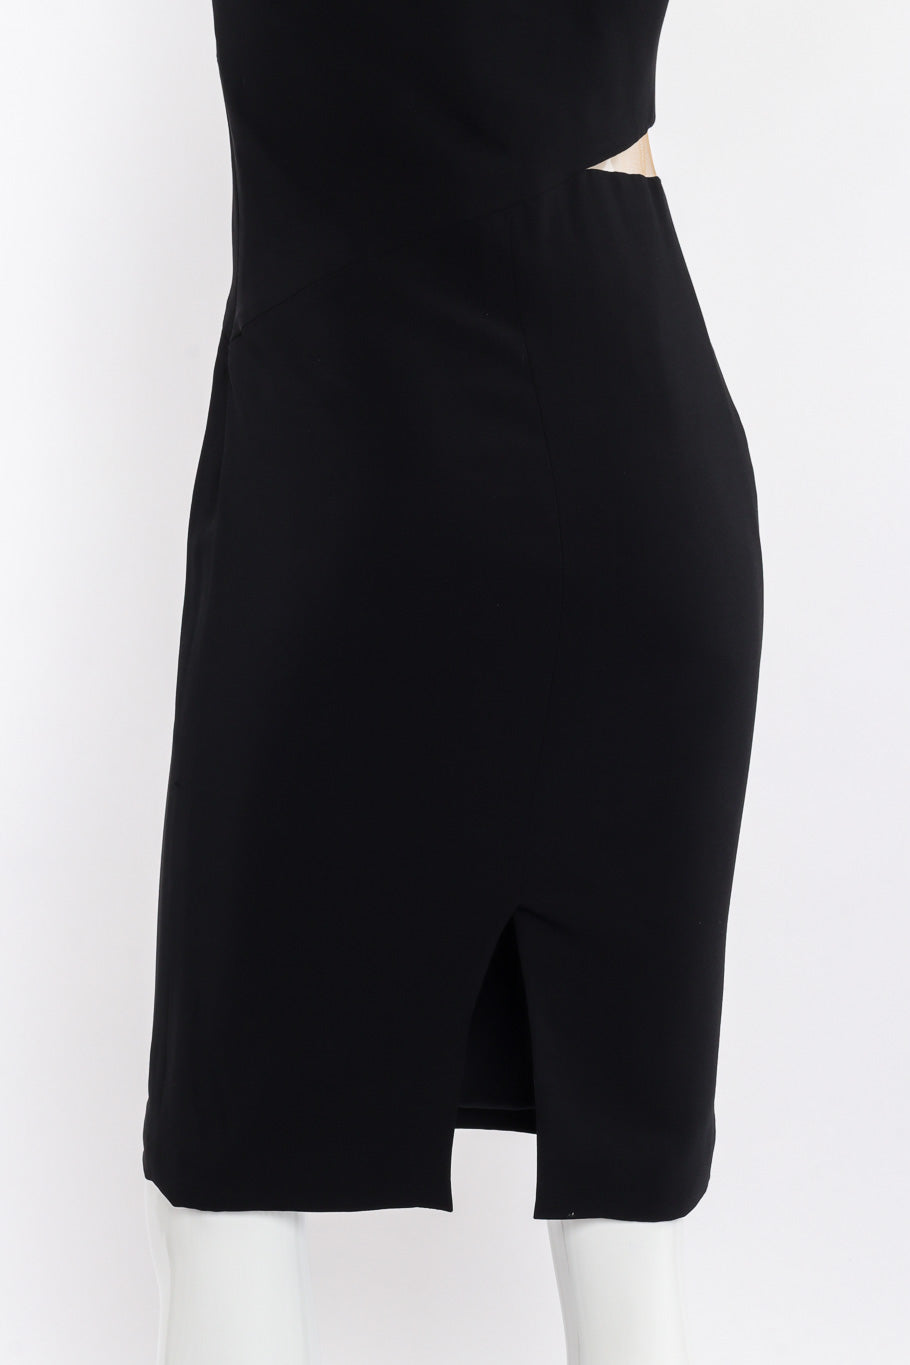 Versace Asymmetric Cut-Out Dress back split seam closeup @Recessla